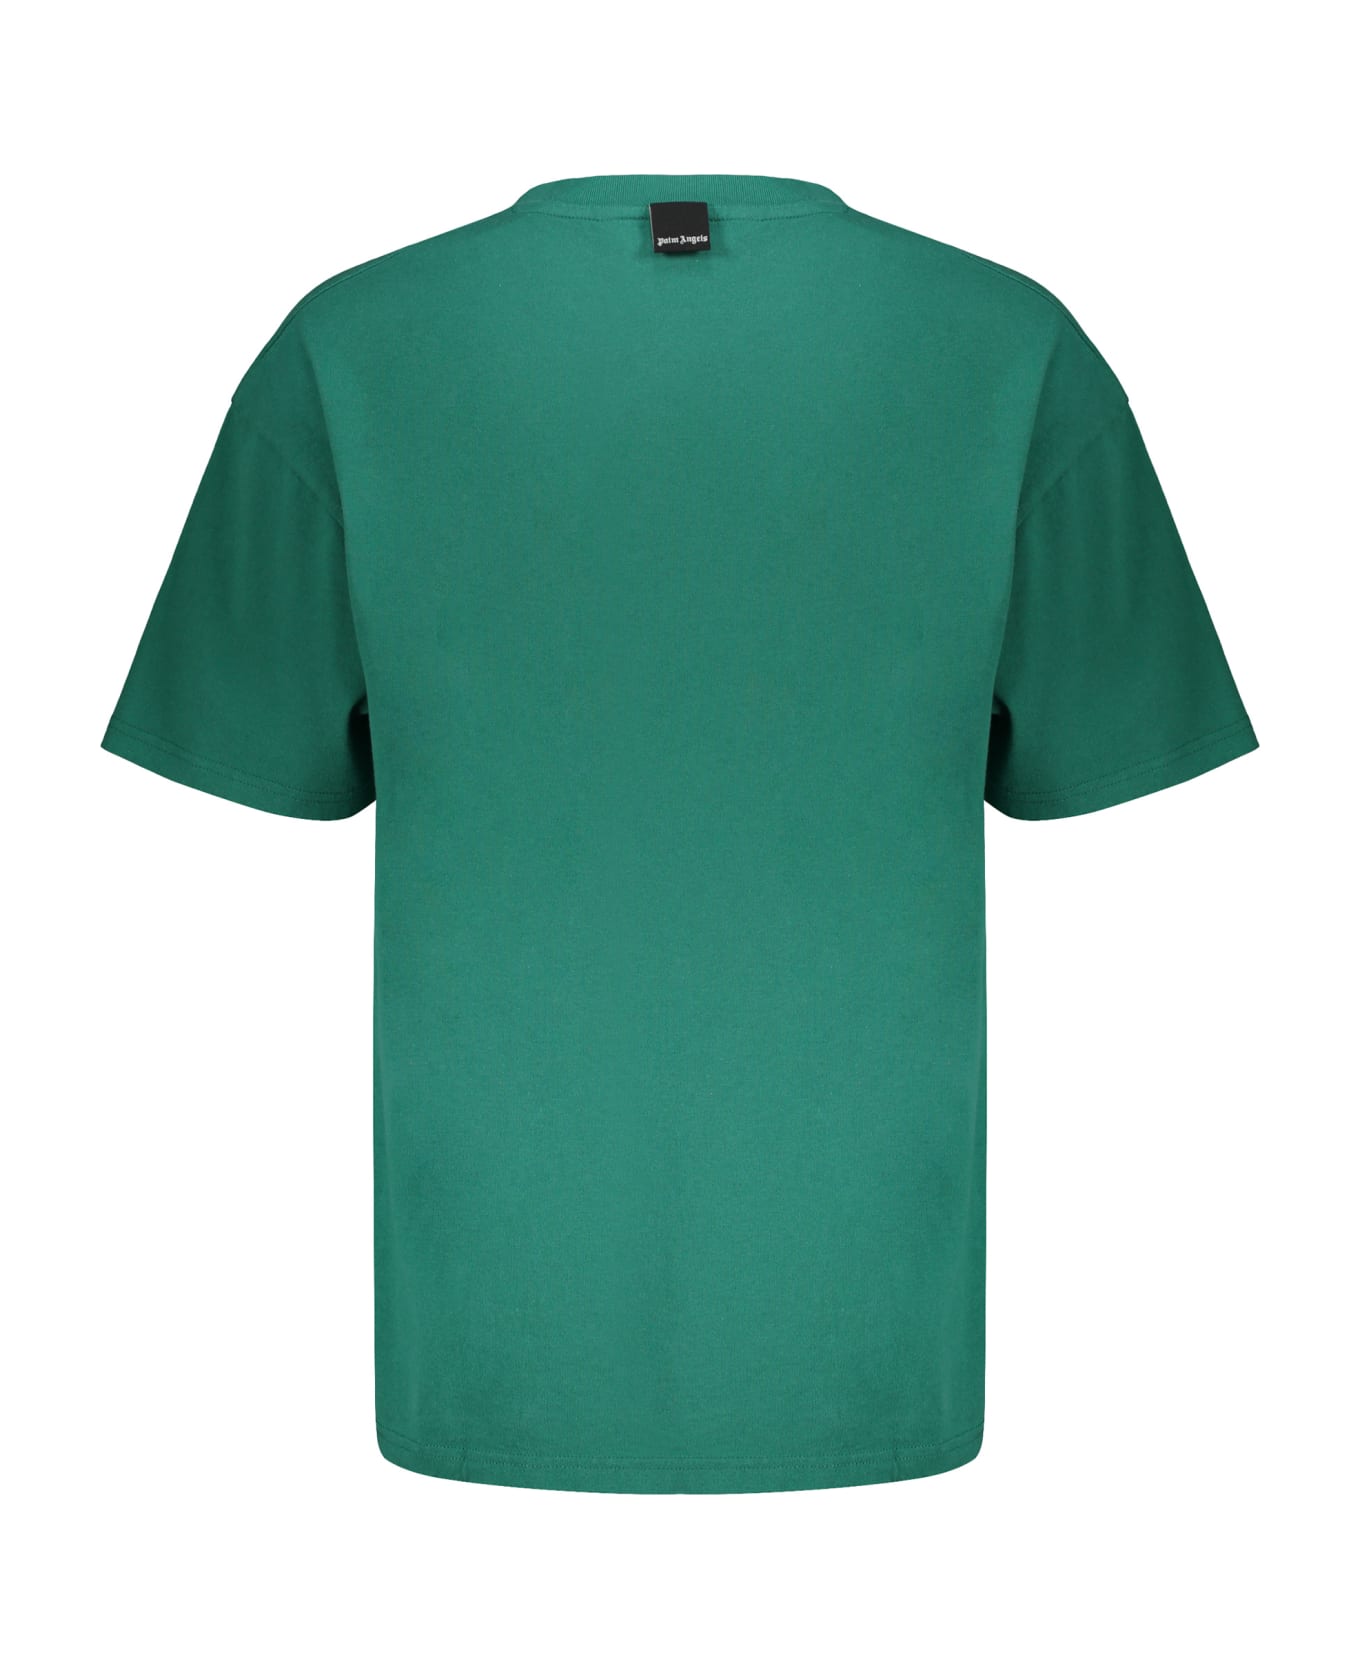 Palm Angels Cotton T-shirt - green シャツ